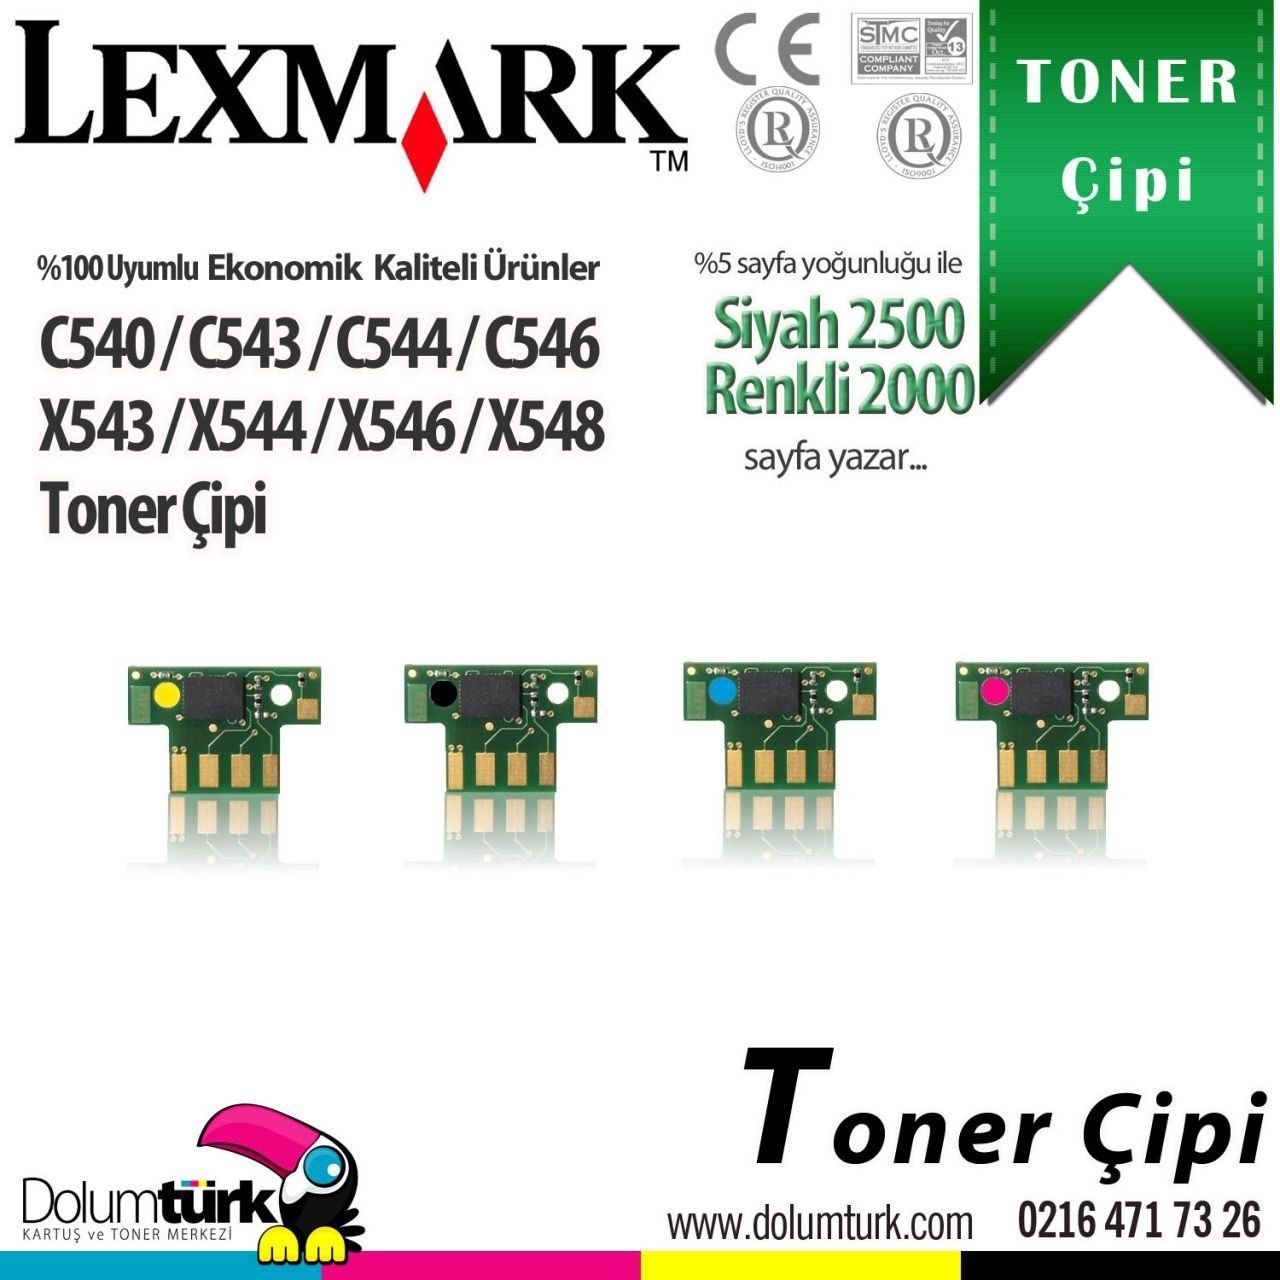 Lexmark C540 / C544 / C546 / X544 / X546 / X548 Set Çip